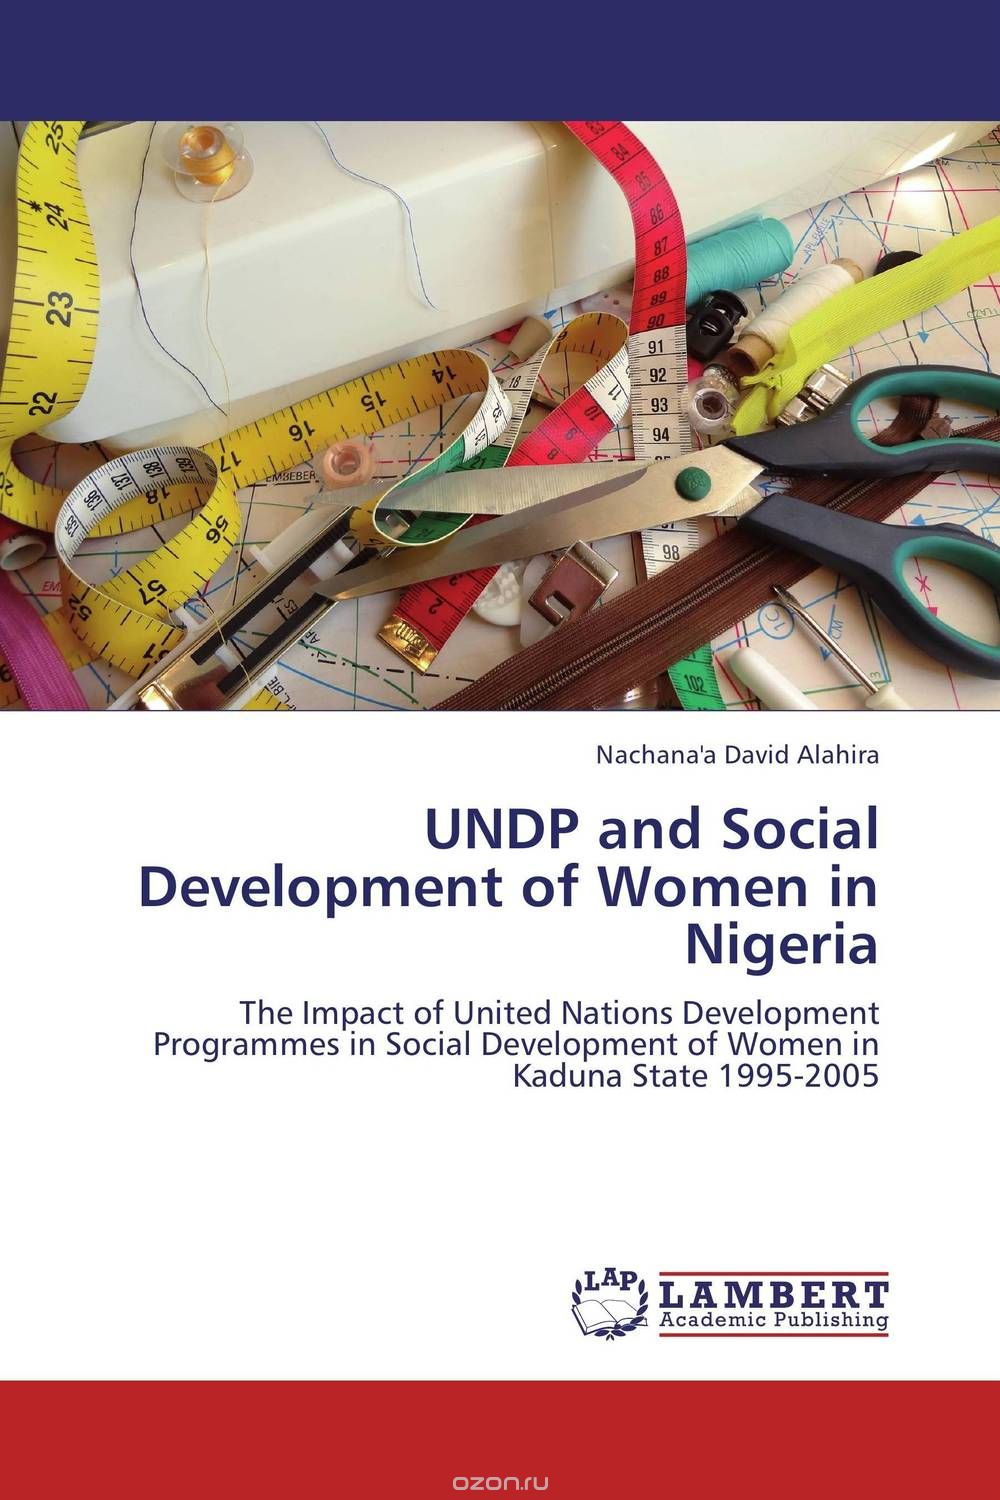 UNDP and Social Development of Women in Nigeria